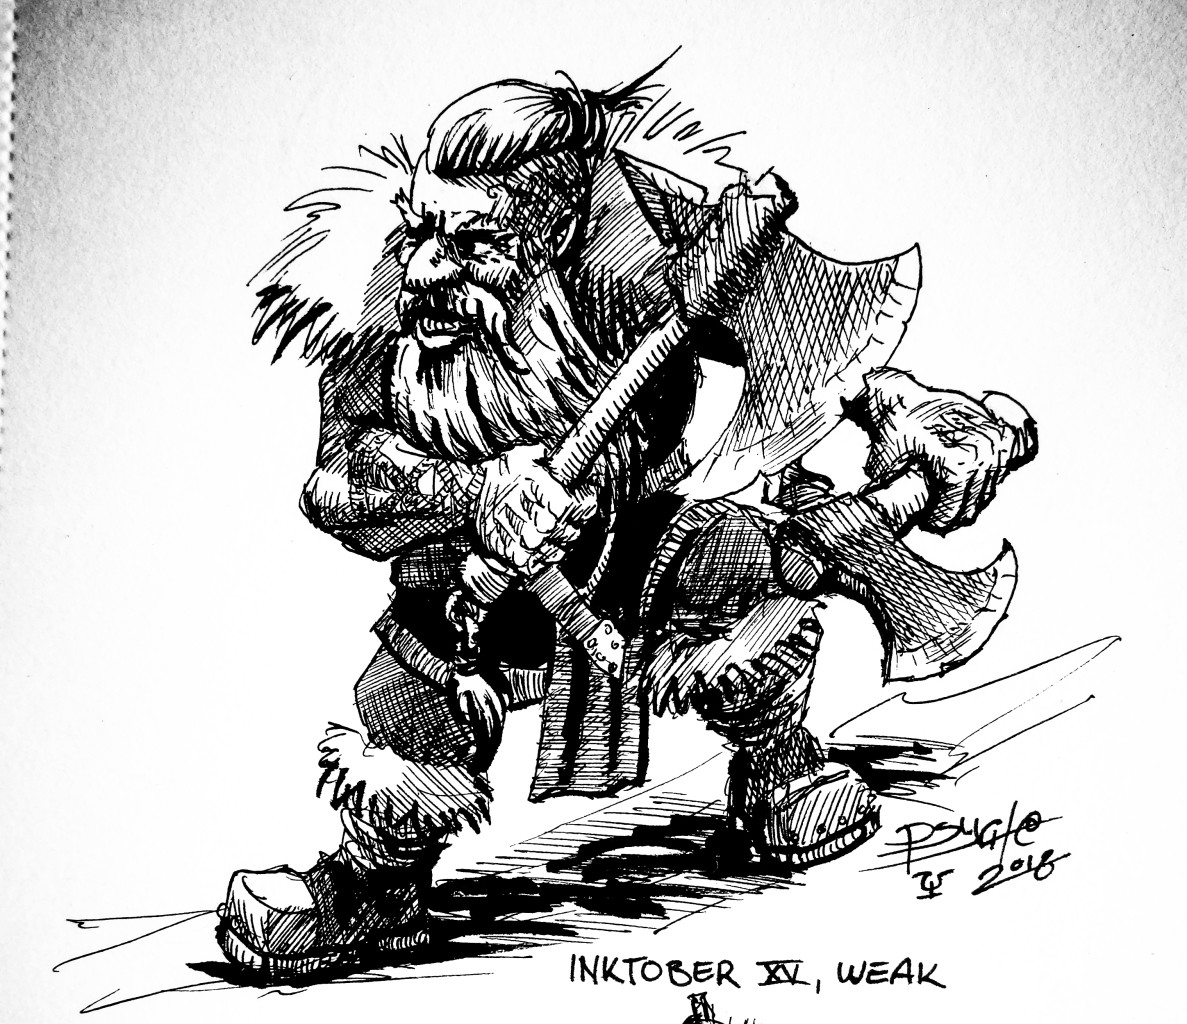 Did I hear anyone say that dwarves are "Weak"?